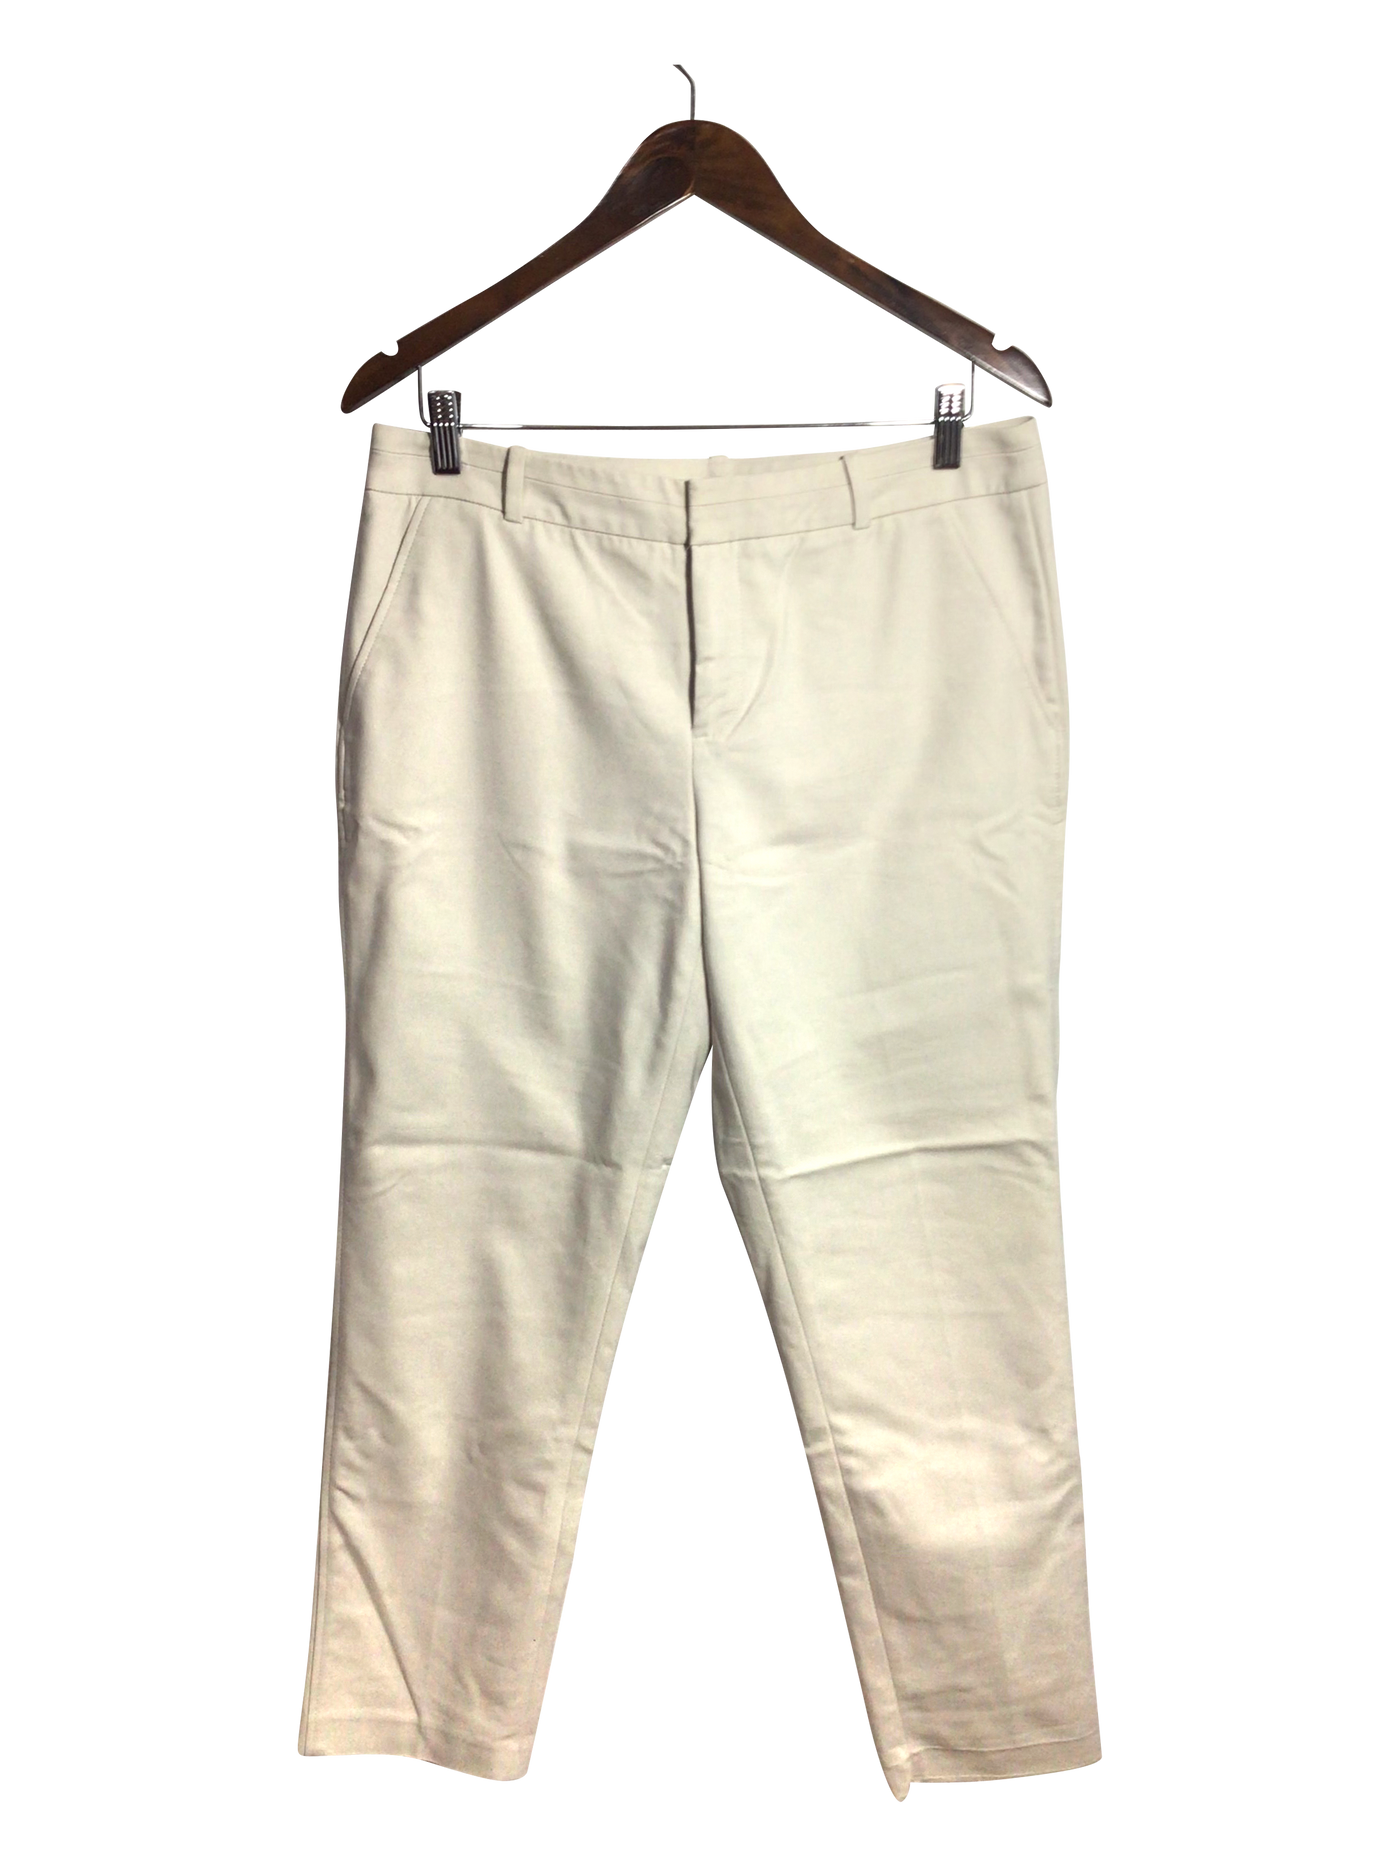 CONTEMPORAINE Women Work Pants Regular fit in White - Size 10 | 33.5 $ KOOP